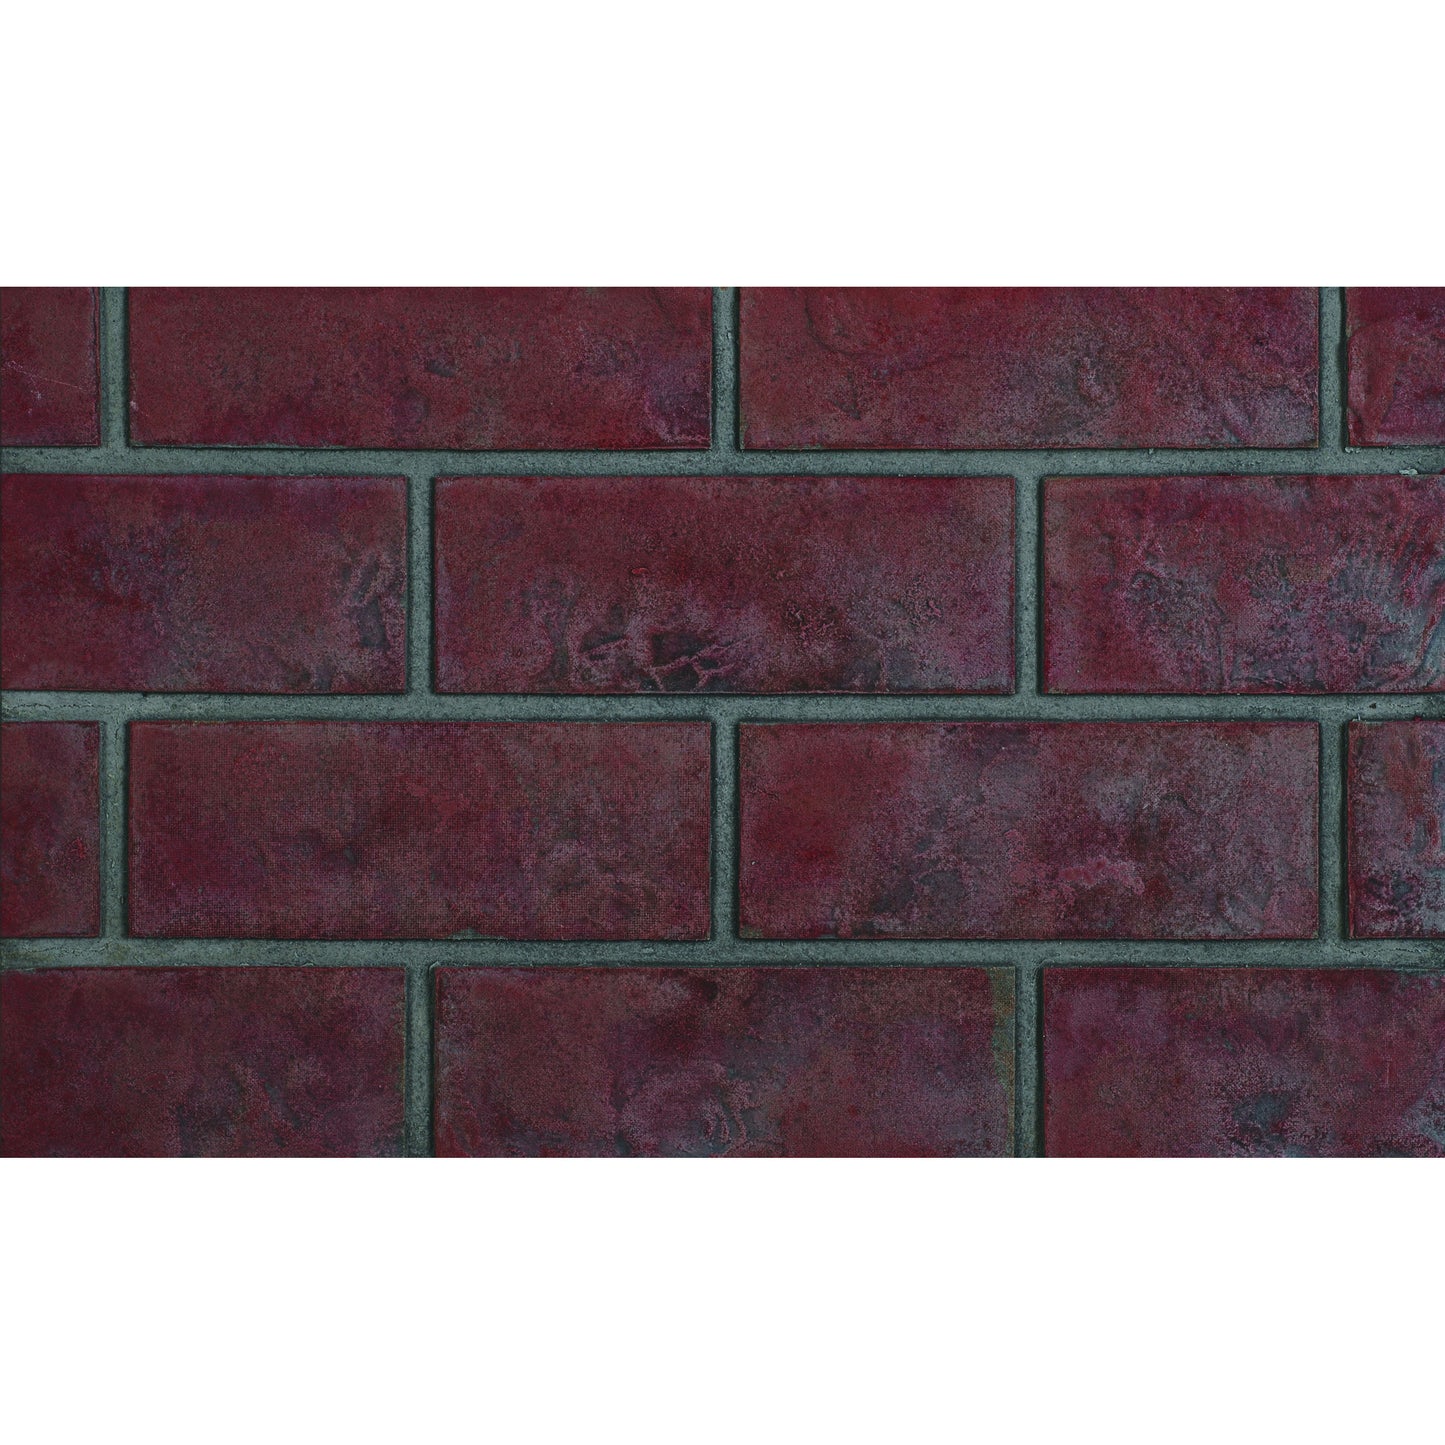 NAPDBPIX4OS | Napoleon GDIX4 Decorative Brick Panels | Old Town Red Standard